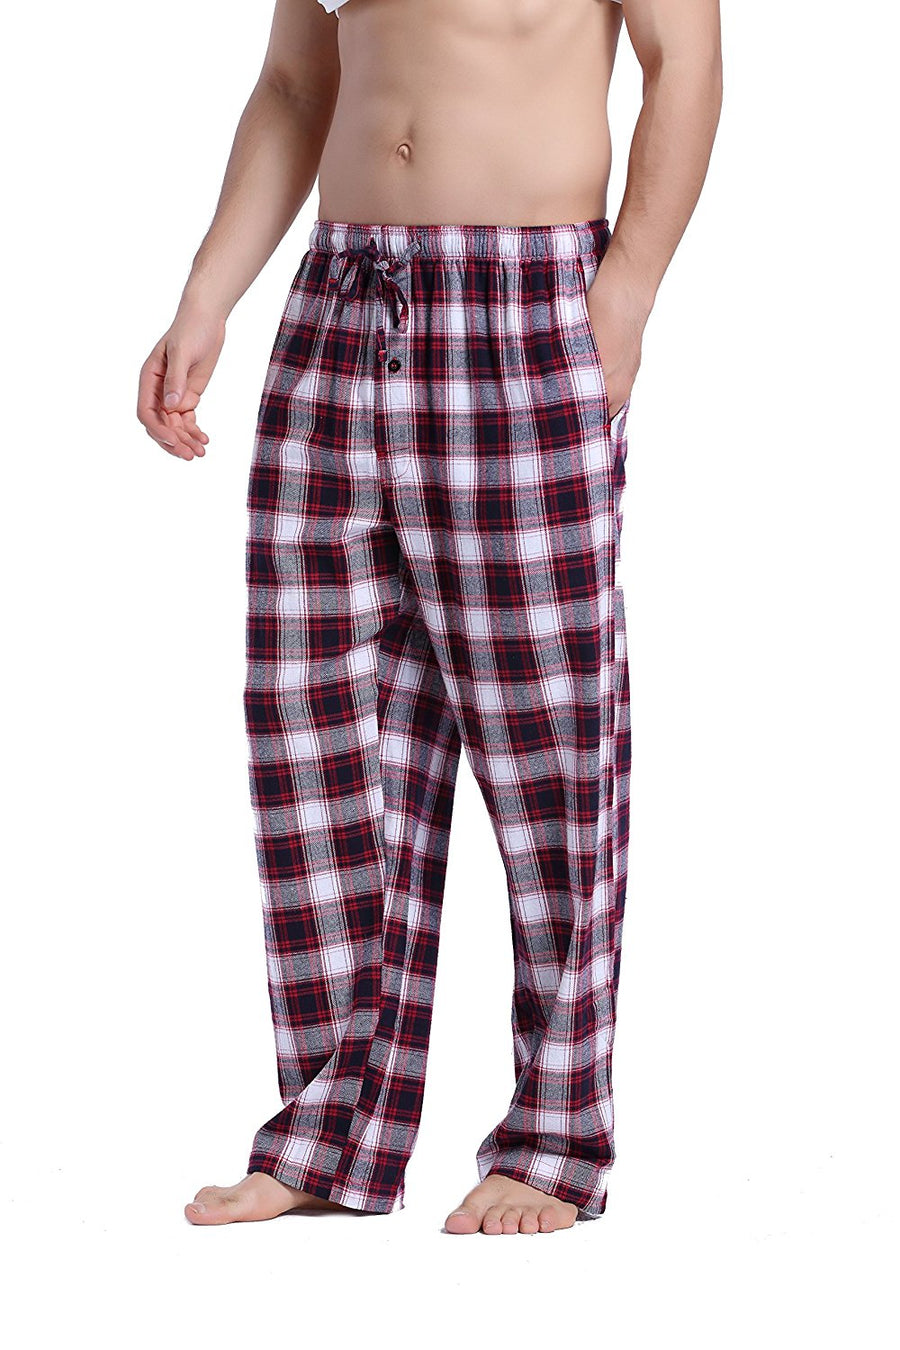  YUSHOW Mens Flannel Pajamas Set Cotton Plaid Pjs Button Down  Warm Soft Lounge Sleepwear Top & Pj Pants